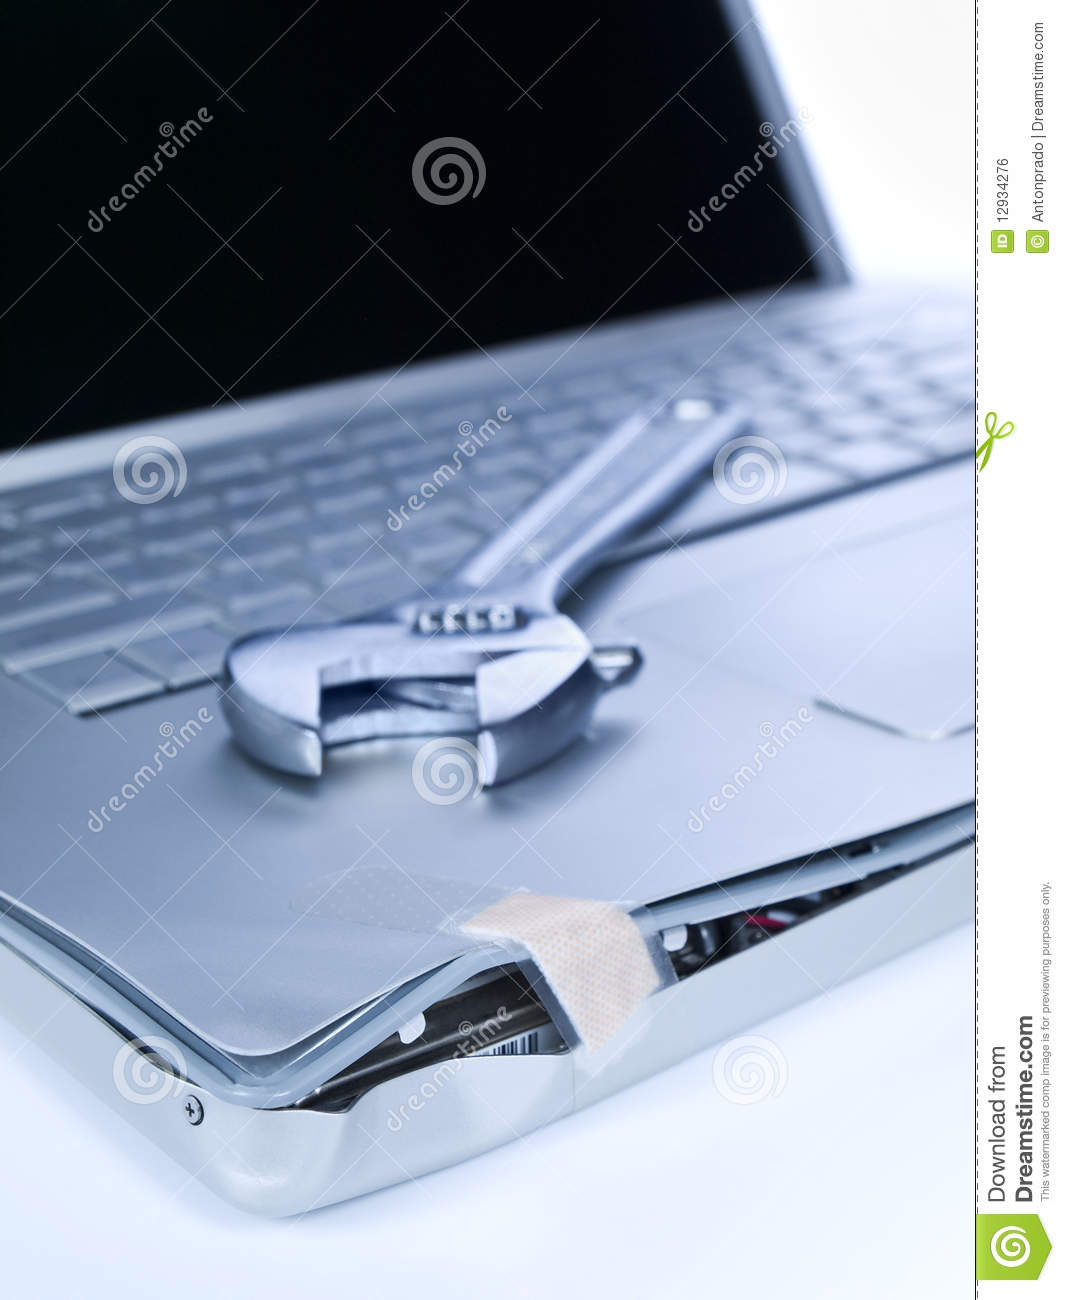 Damaged Laptop Royalty Free Stock Image   Image  12934276